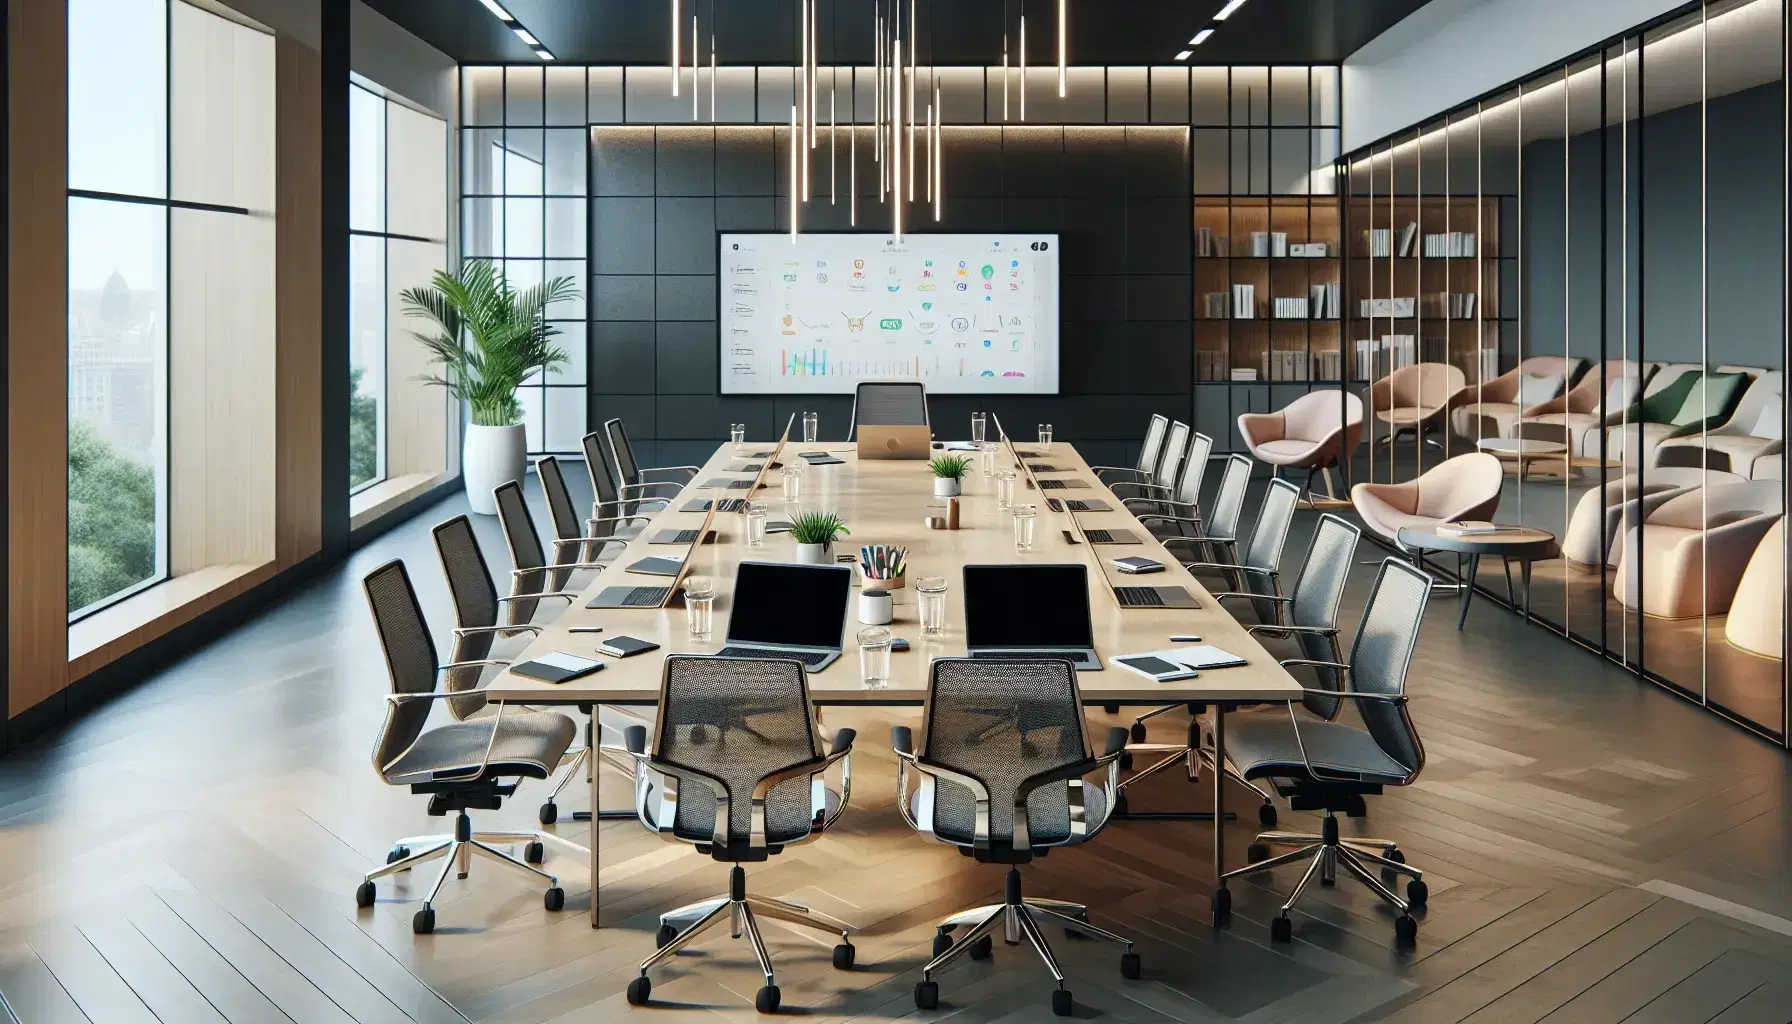 Sala de reuniones moderna con mesa rectangular, sillas ergonómicas, laptops, teléfonos, pizarra blanca y planta, iluminada por luz natural y artificial.